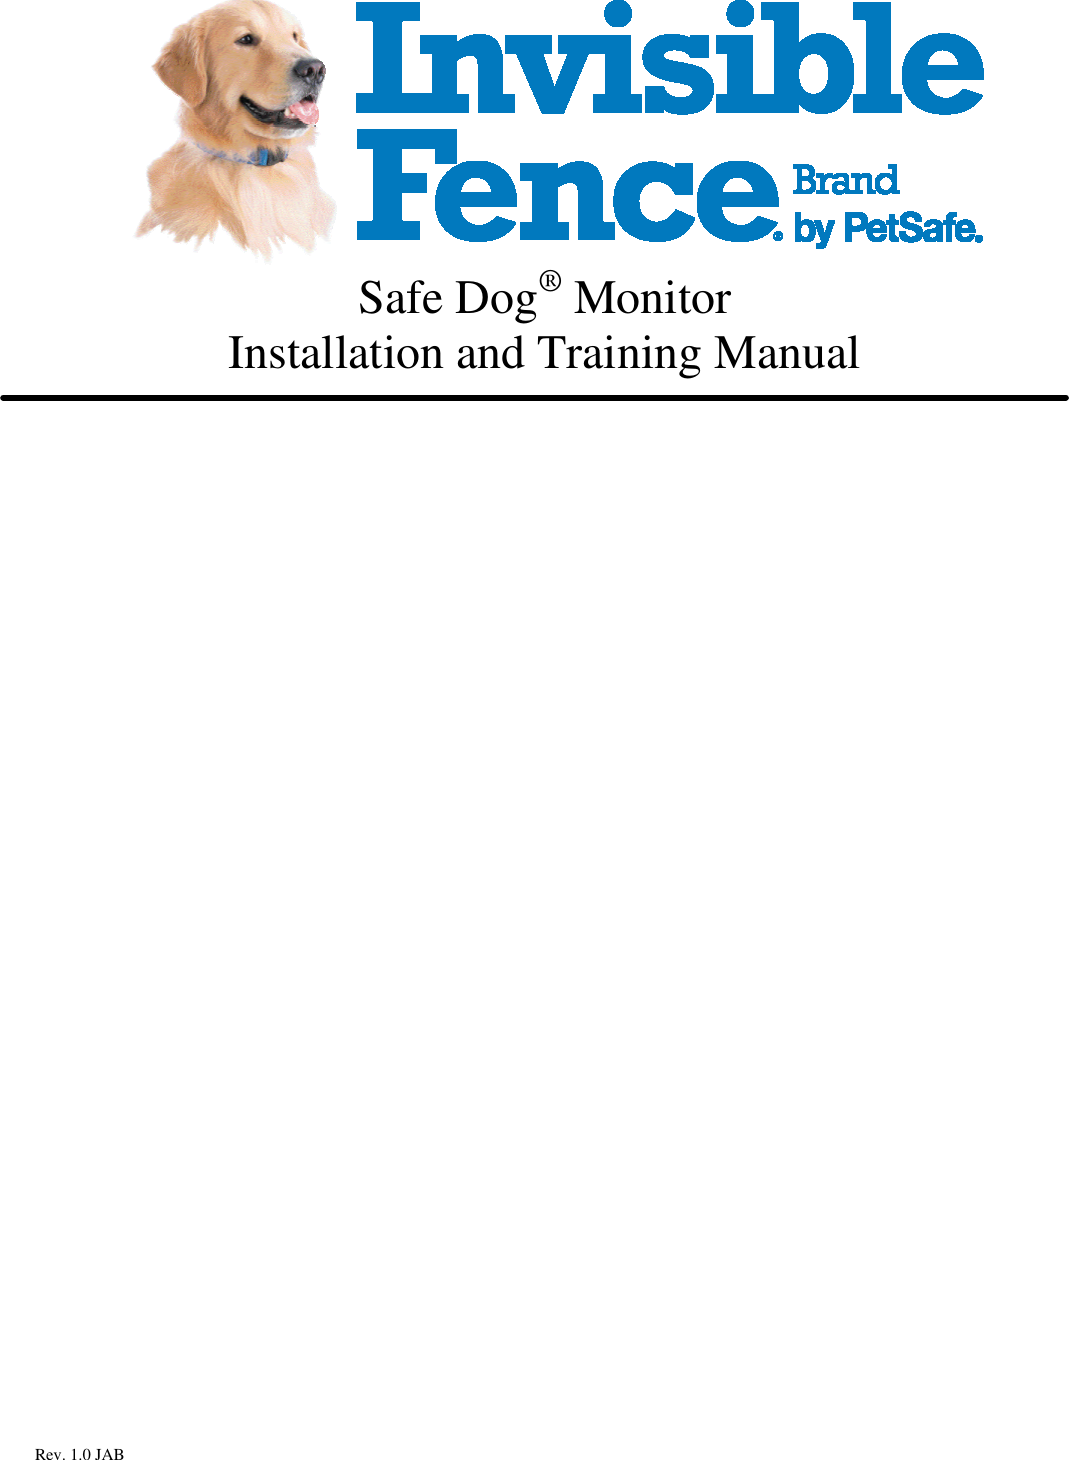 Rev. 1.0 JAB       Safe Dog® Monitor Installation and Training Manual                              